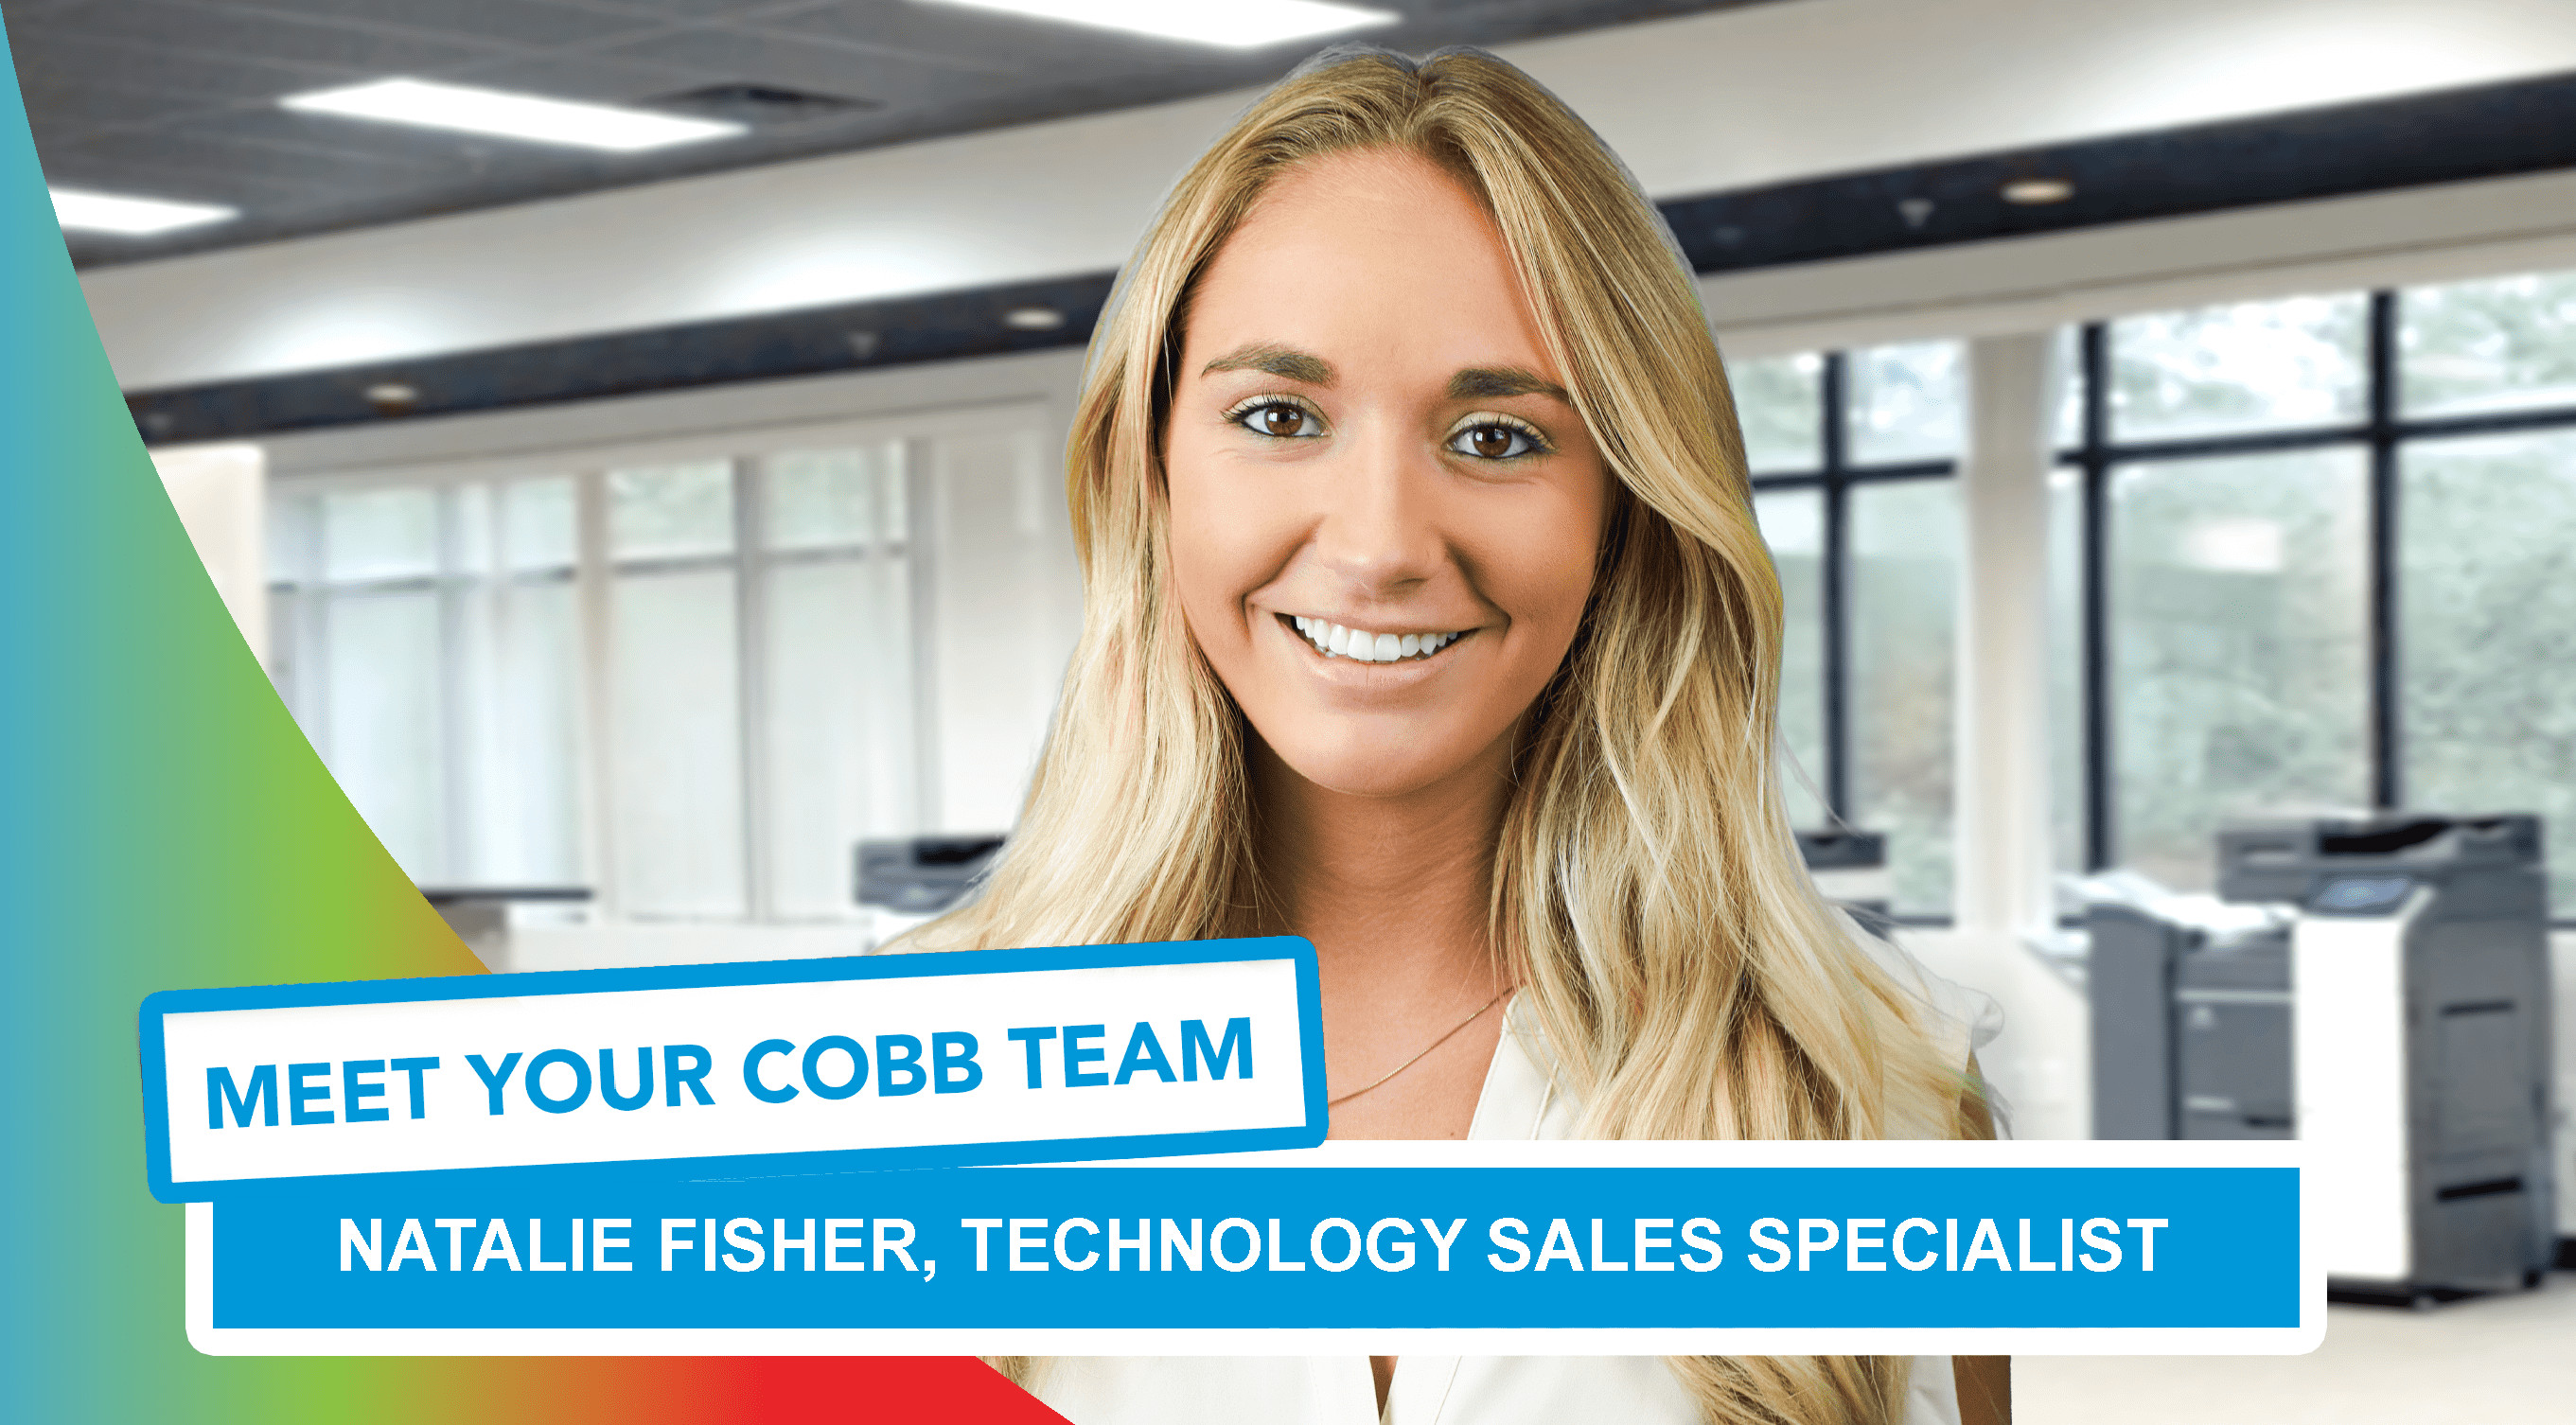 Meet Your Cobb Team: Natalie Fisher, Technology Sales Specialist